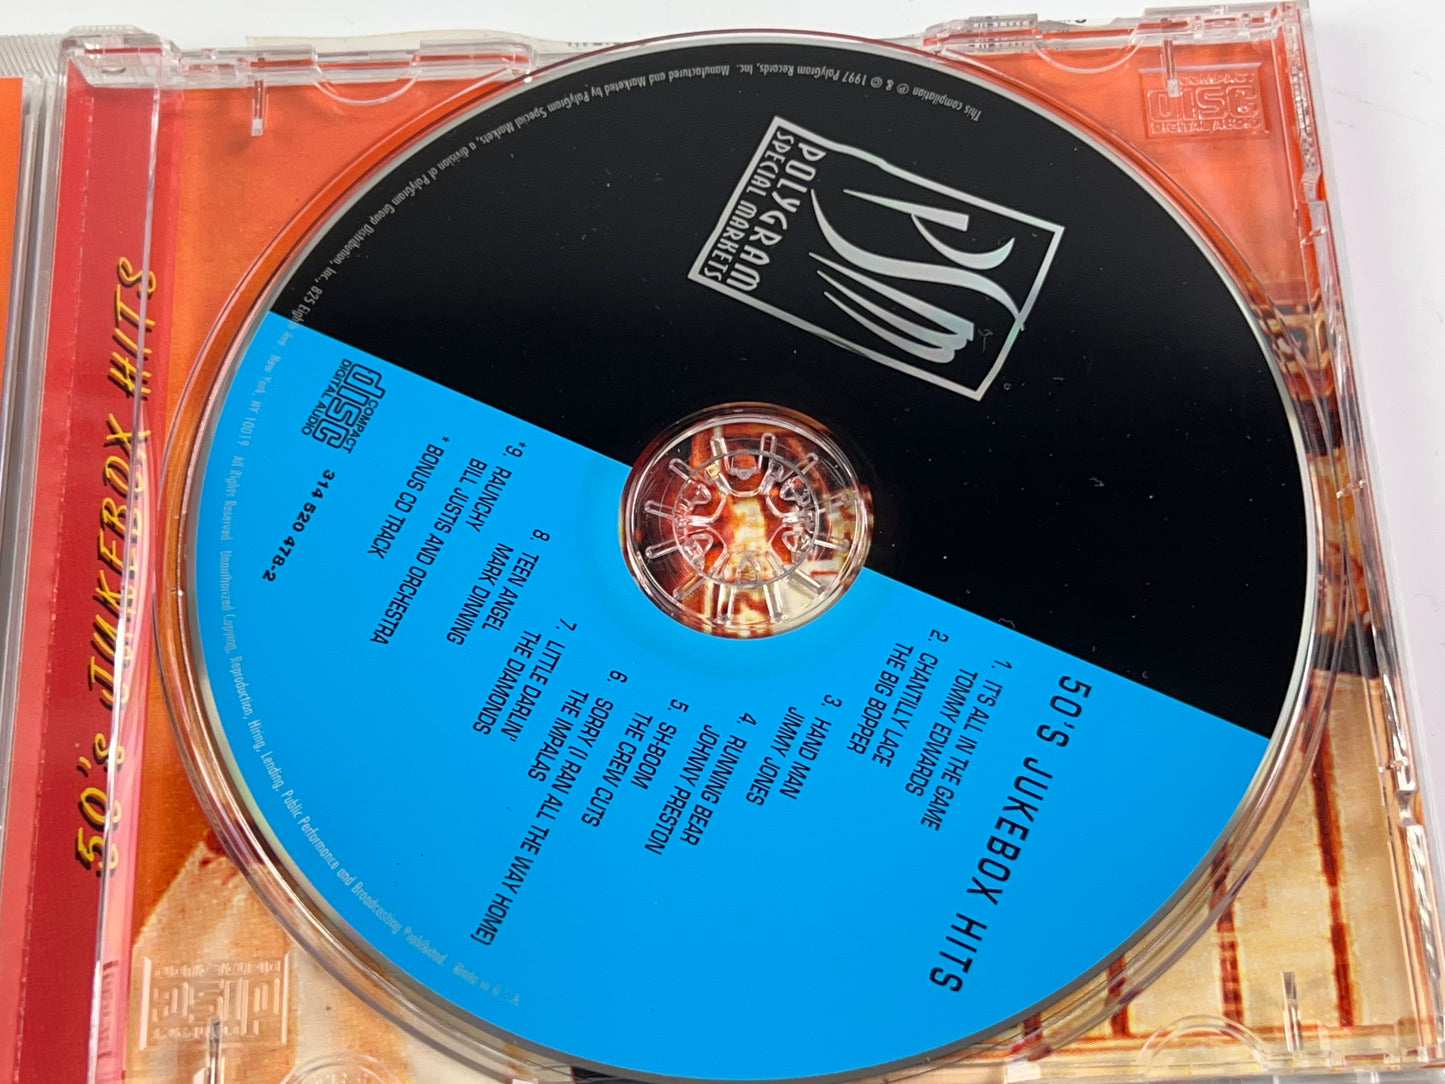 50's Jukebox Hits [Rebound] by Various Artists (CD, Apr-1998, Rebound Records)